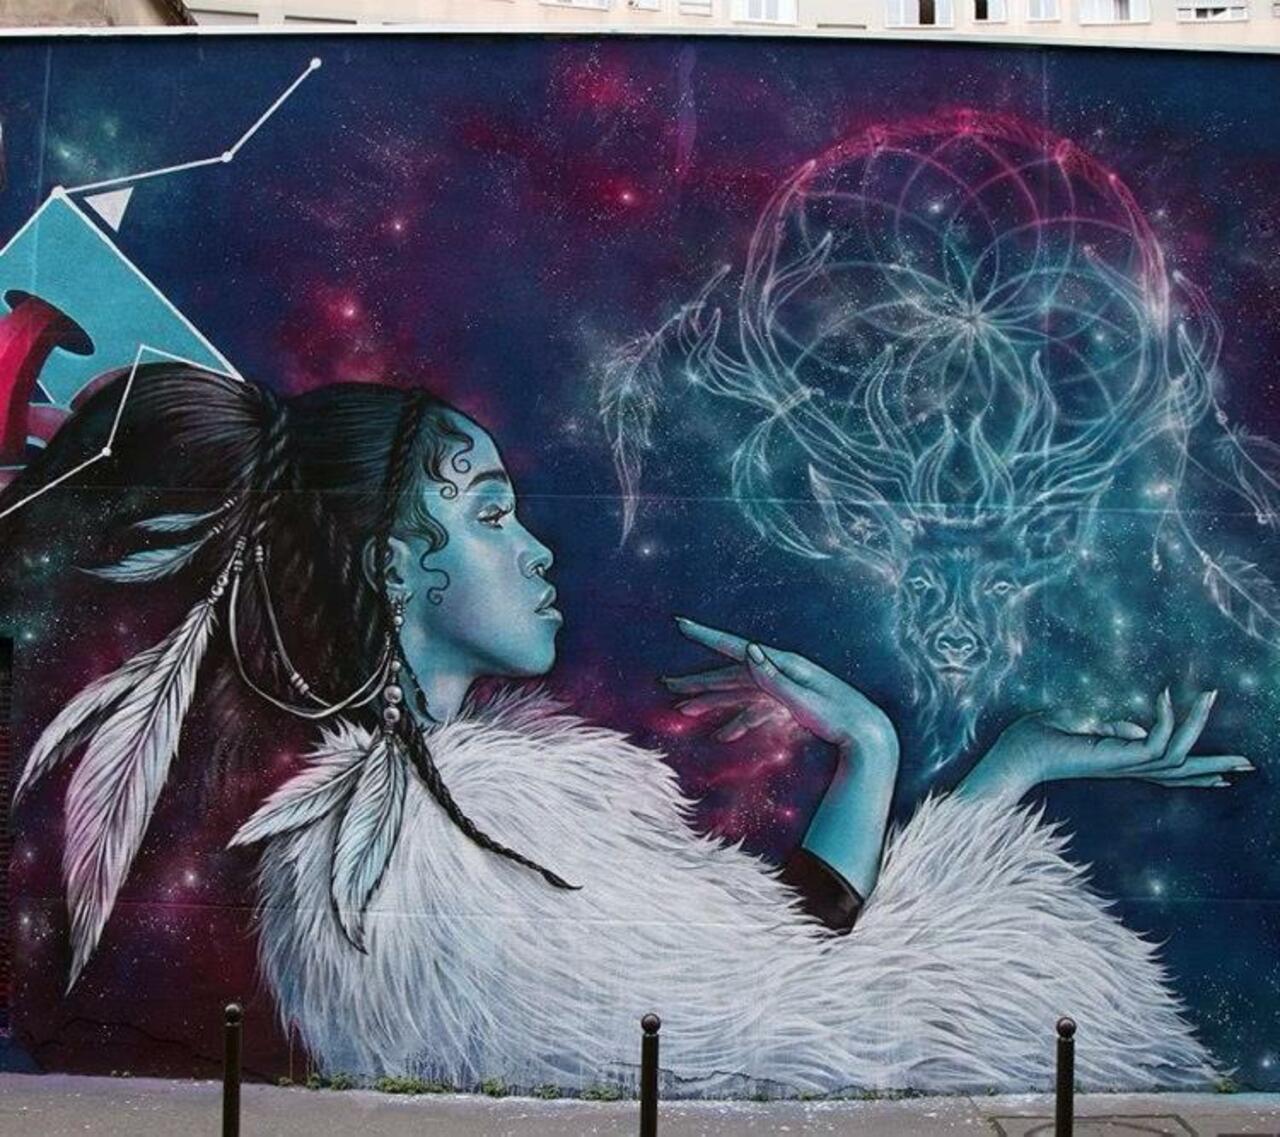 RT @designopinion: Artist Alex new Street Art mural located in Paris, France #art #mural #graffiti #streetart http://t.co/qPdFkiRlcV